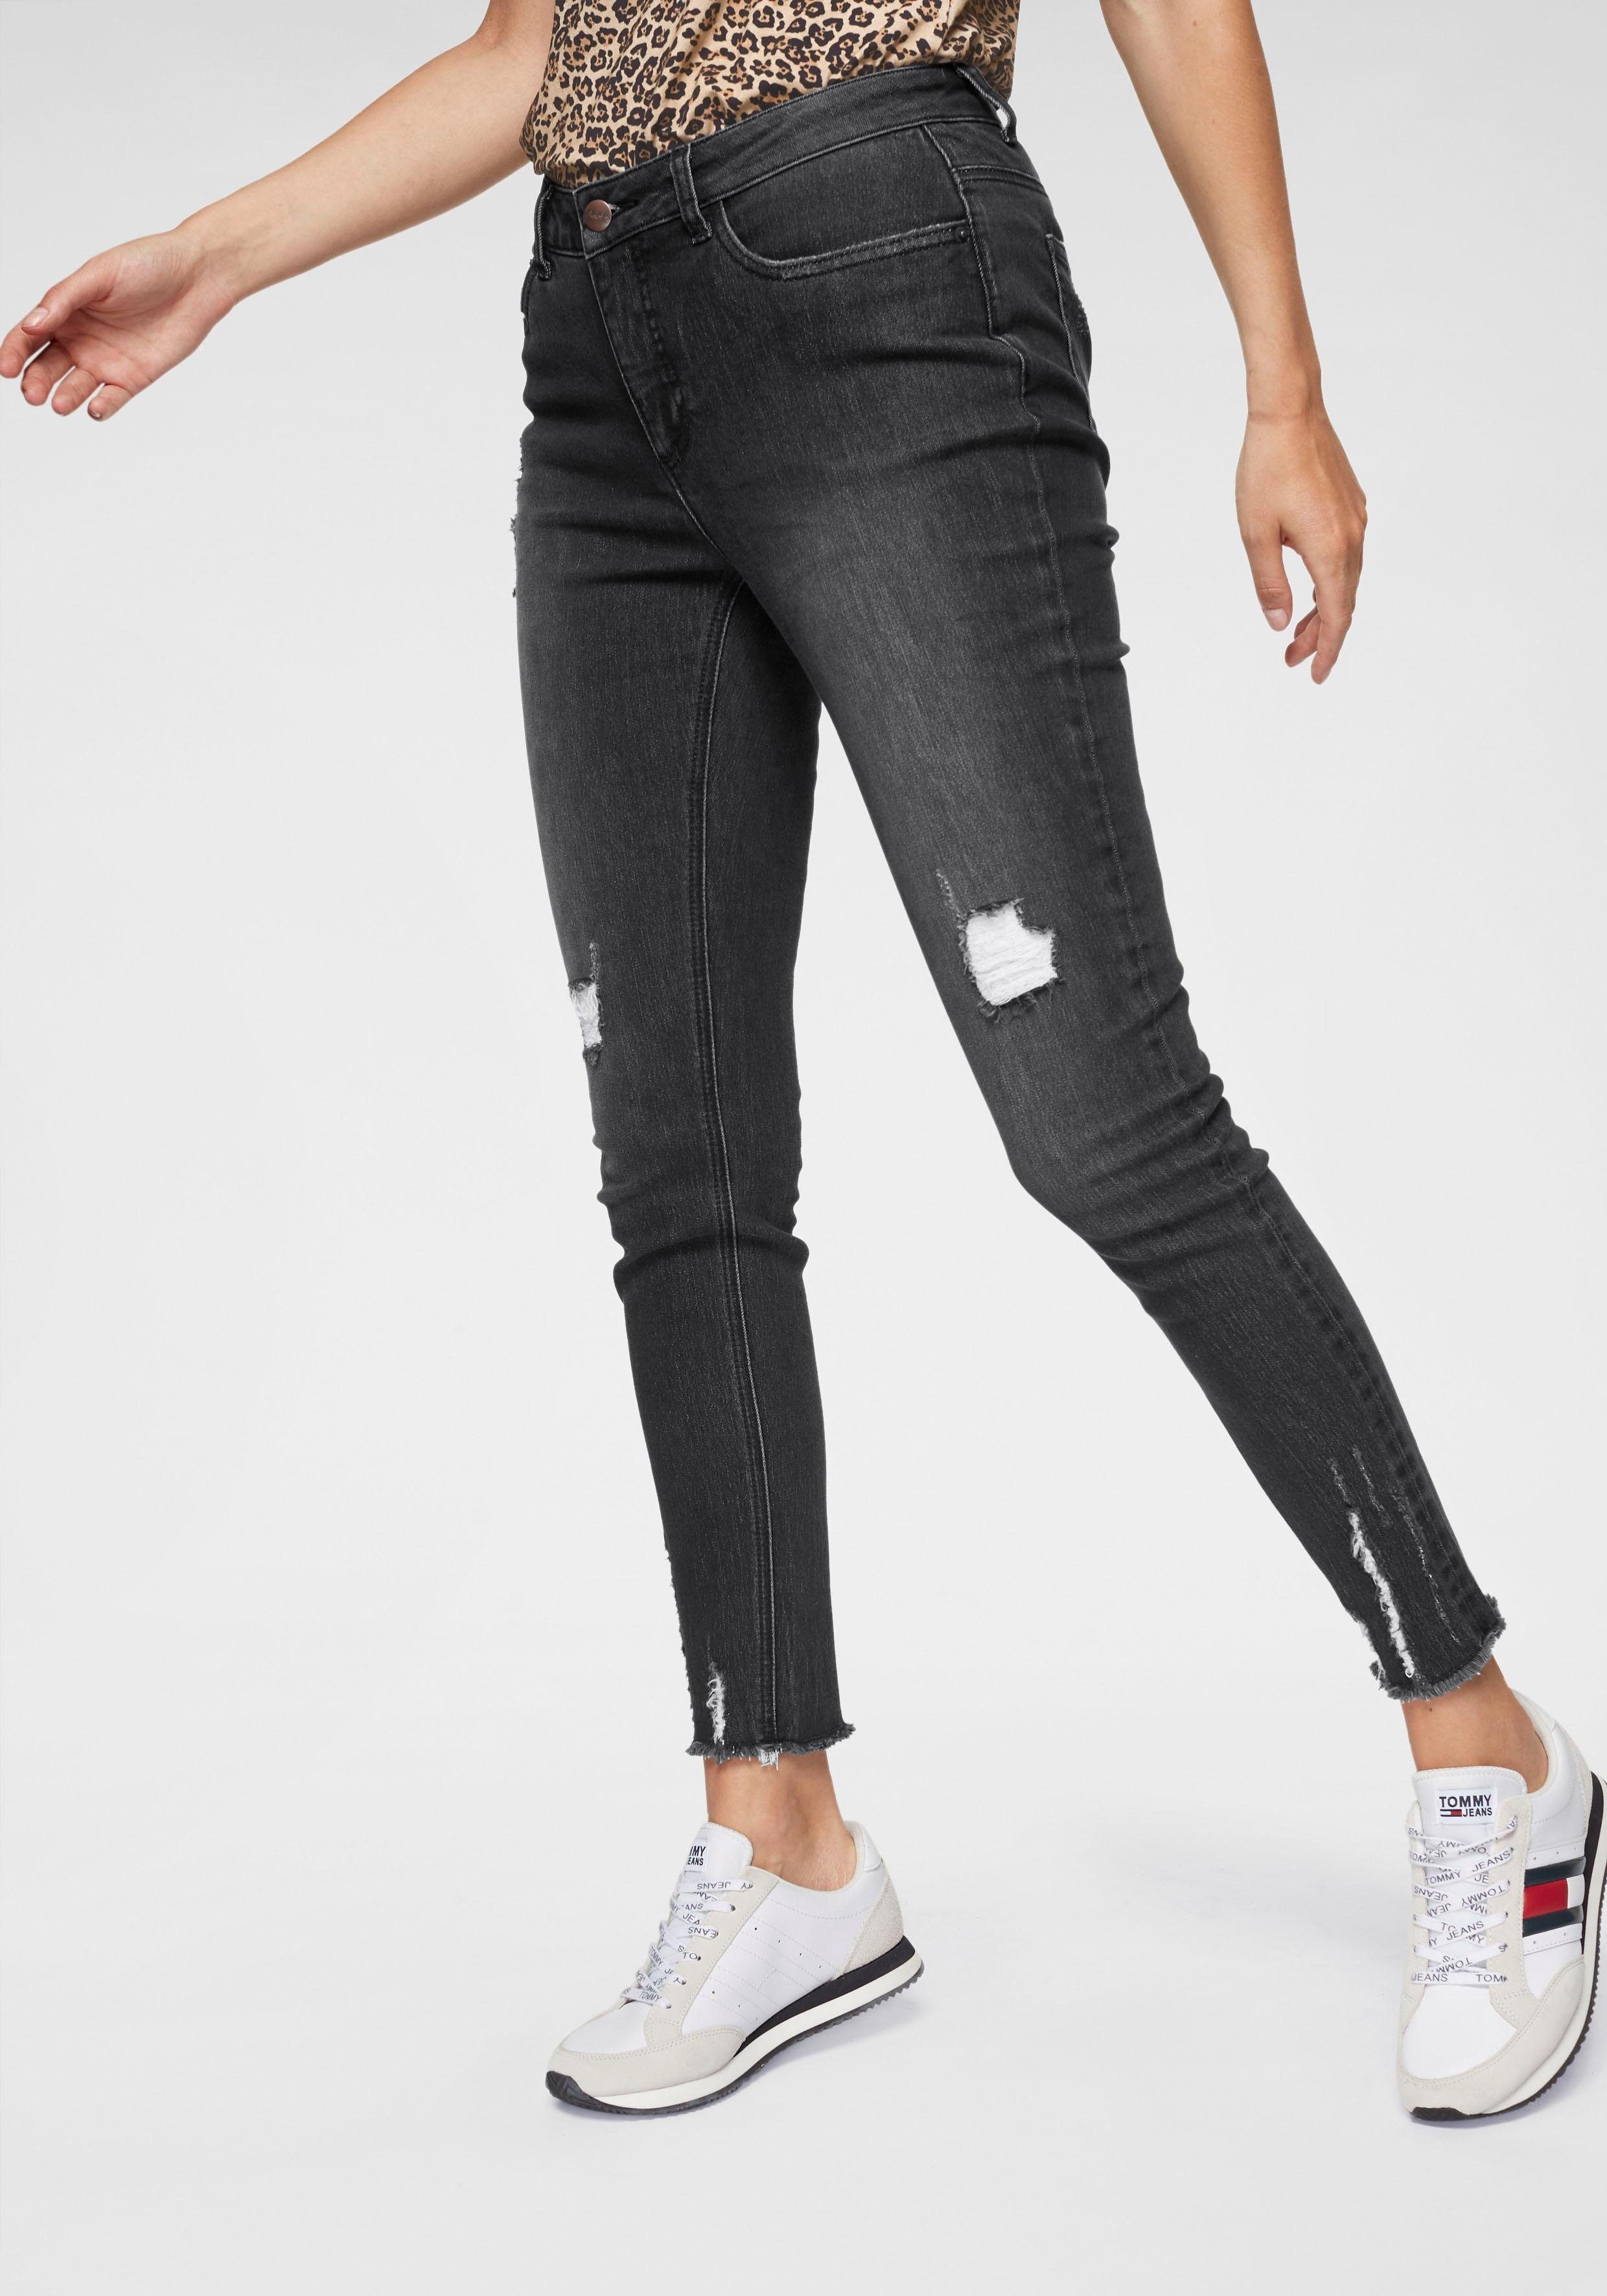 Schwarze Skinny-Jeans online kaufen | OTTO